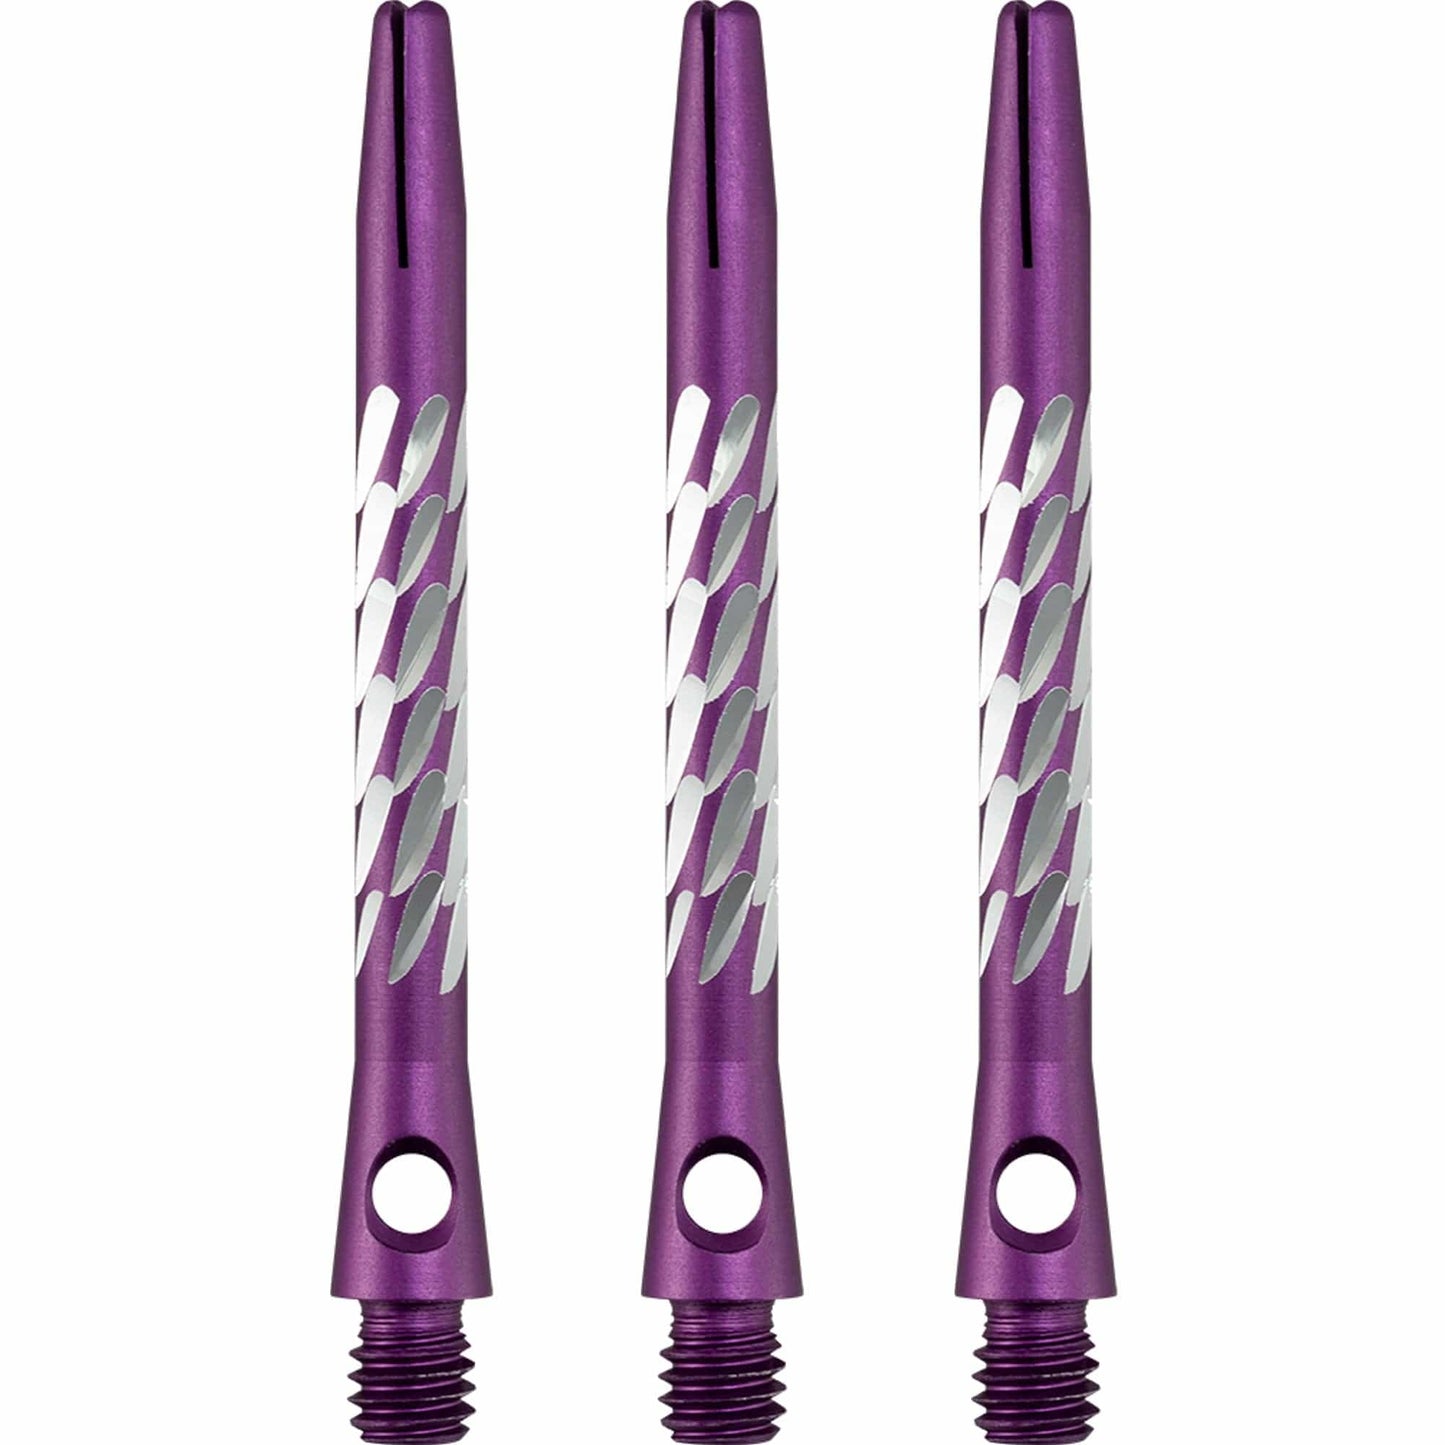 Unicorn Stems - Premier Aluminium Shafts - Purple Medium